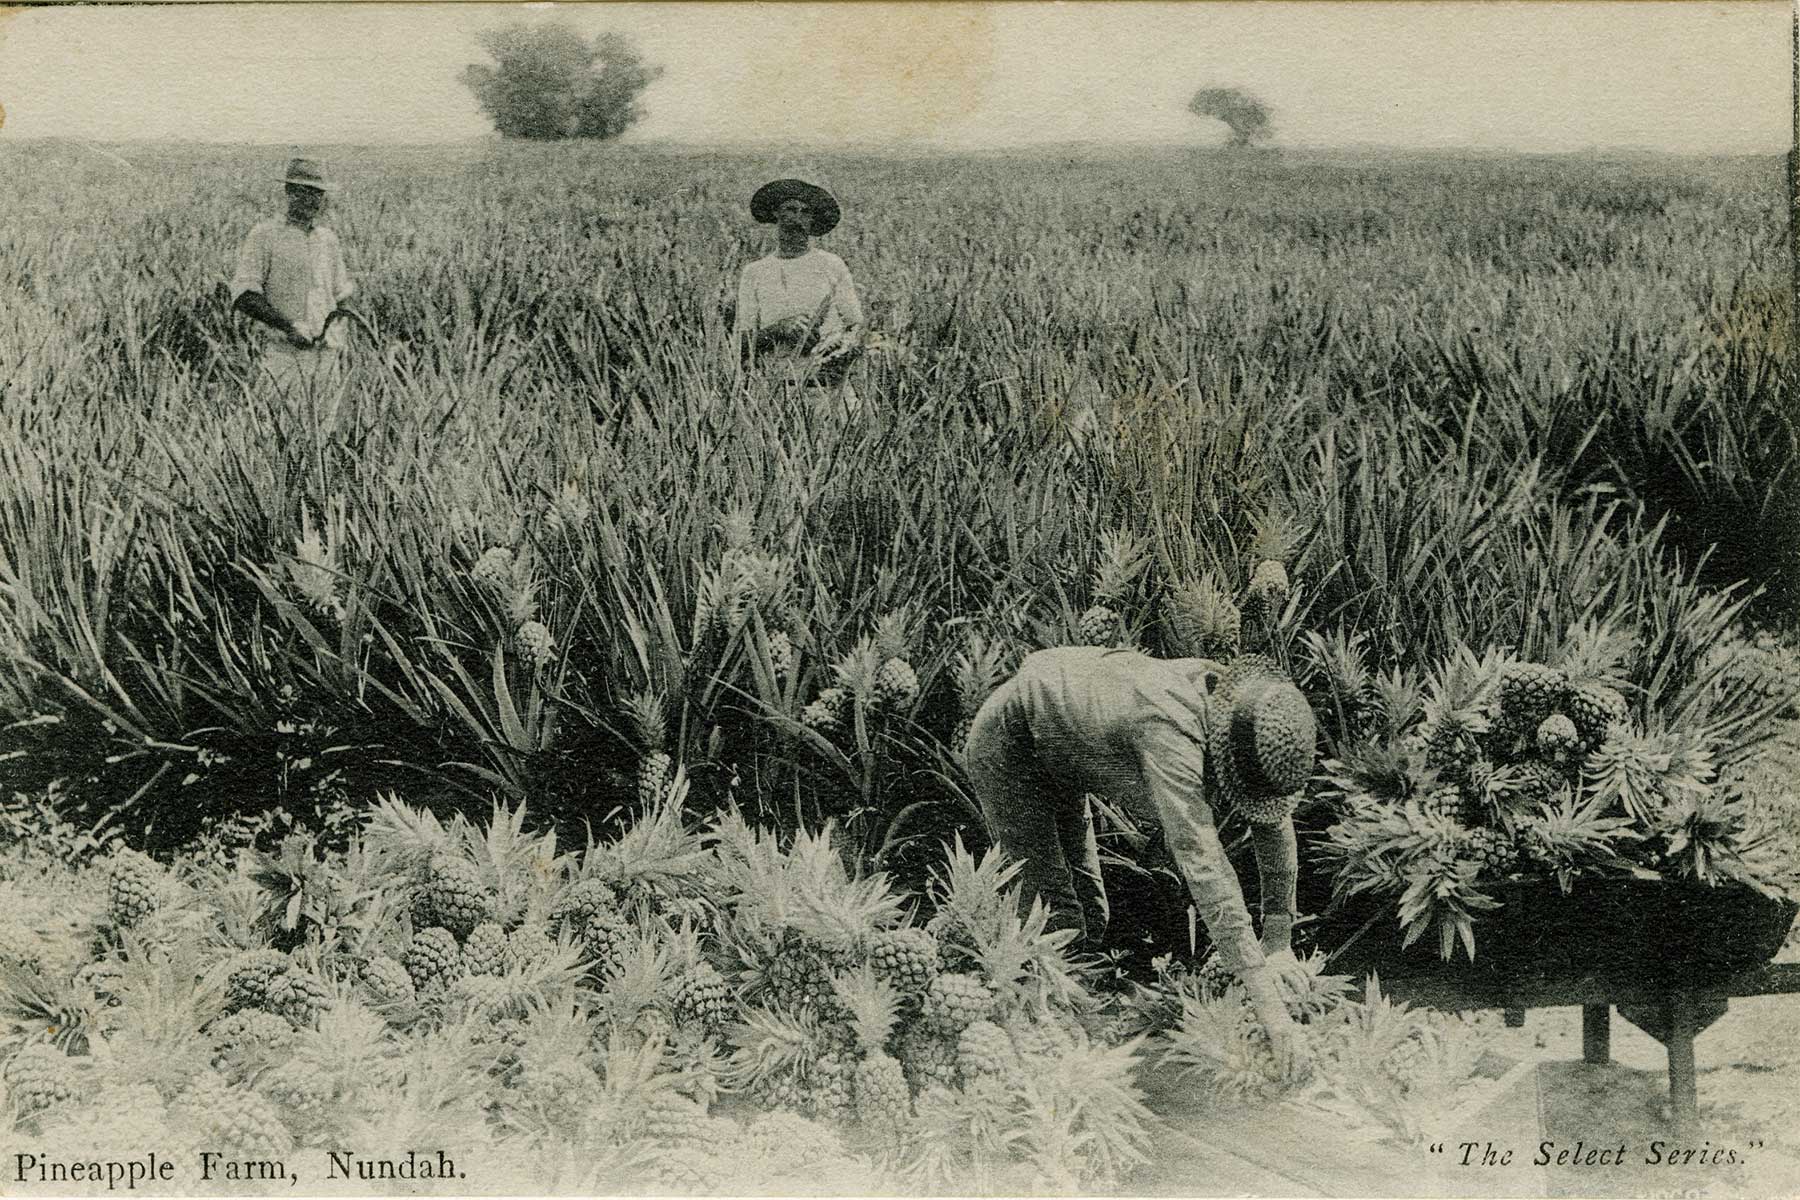  Pineapple farm, Nundah Brisbane, 1893